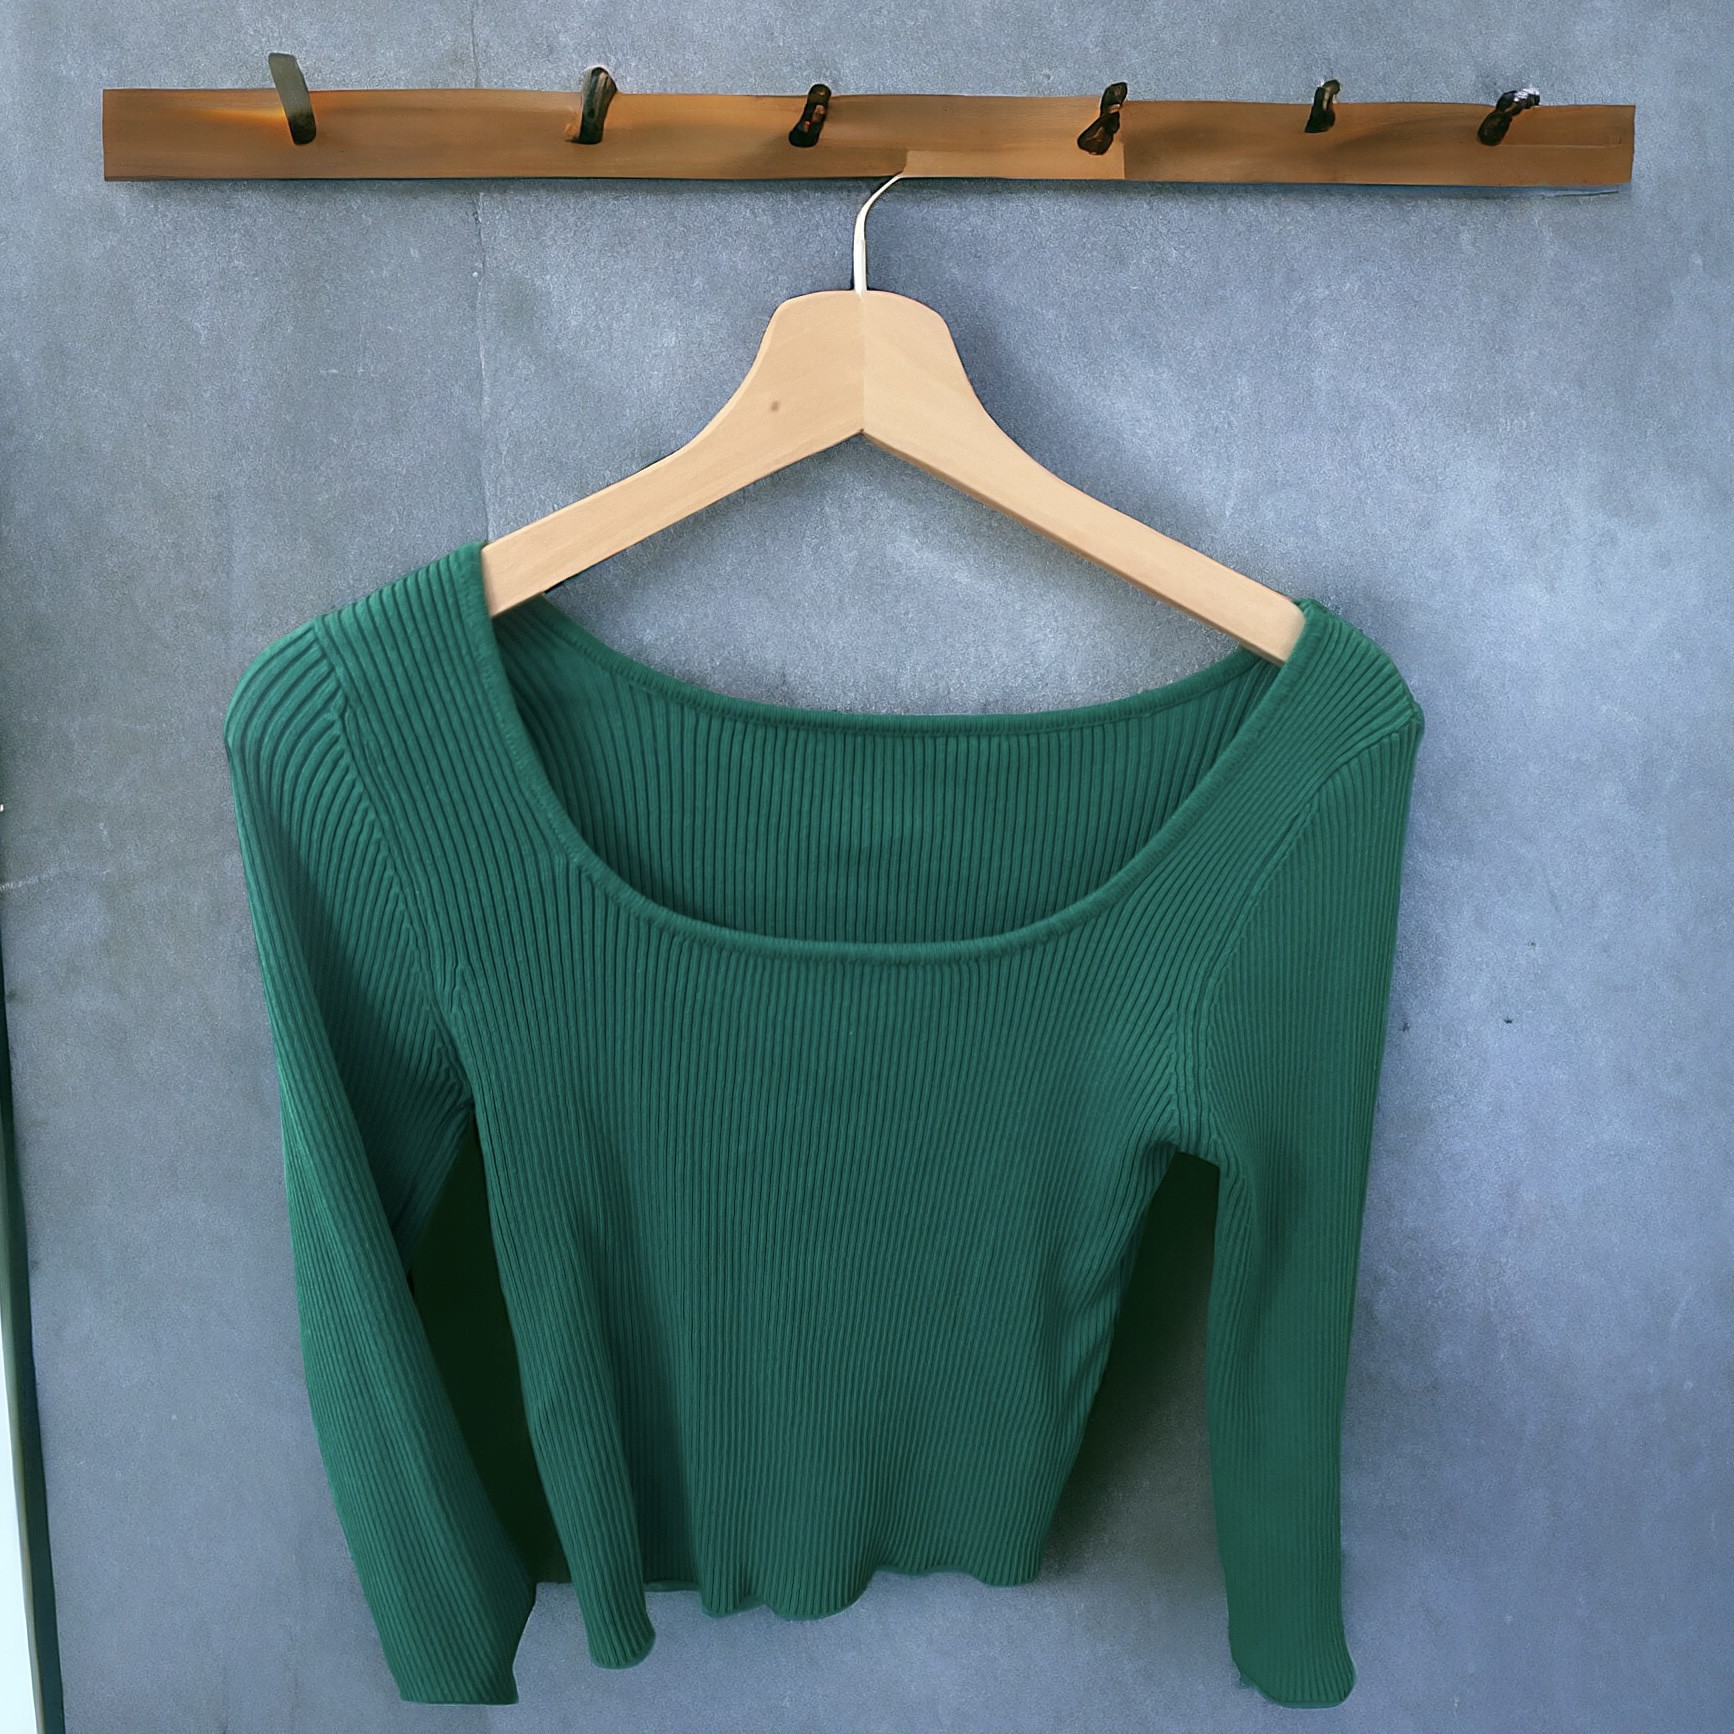 Grüner Pullover